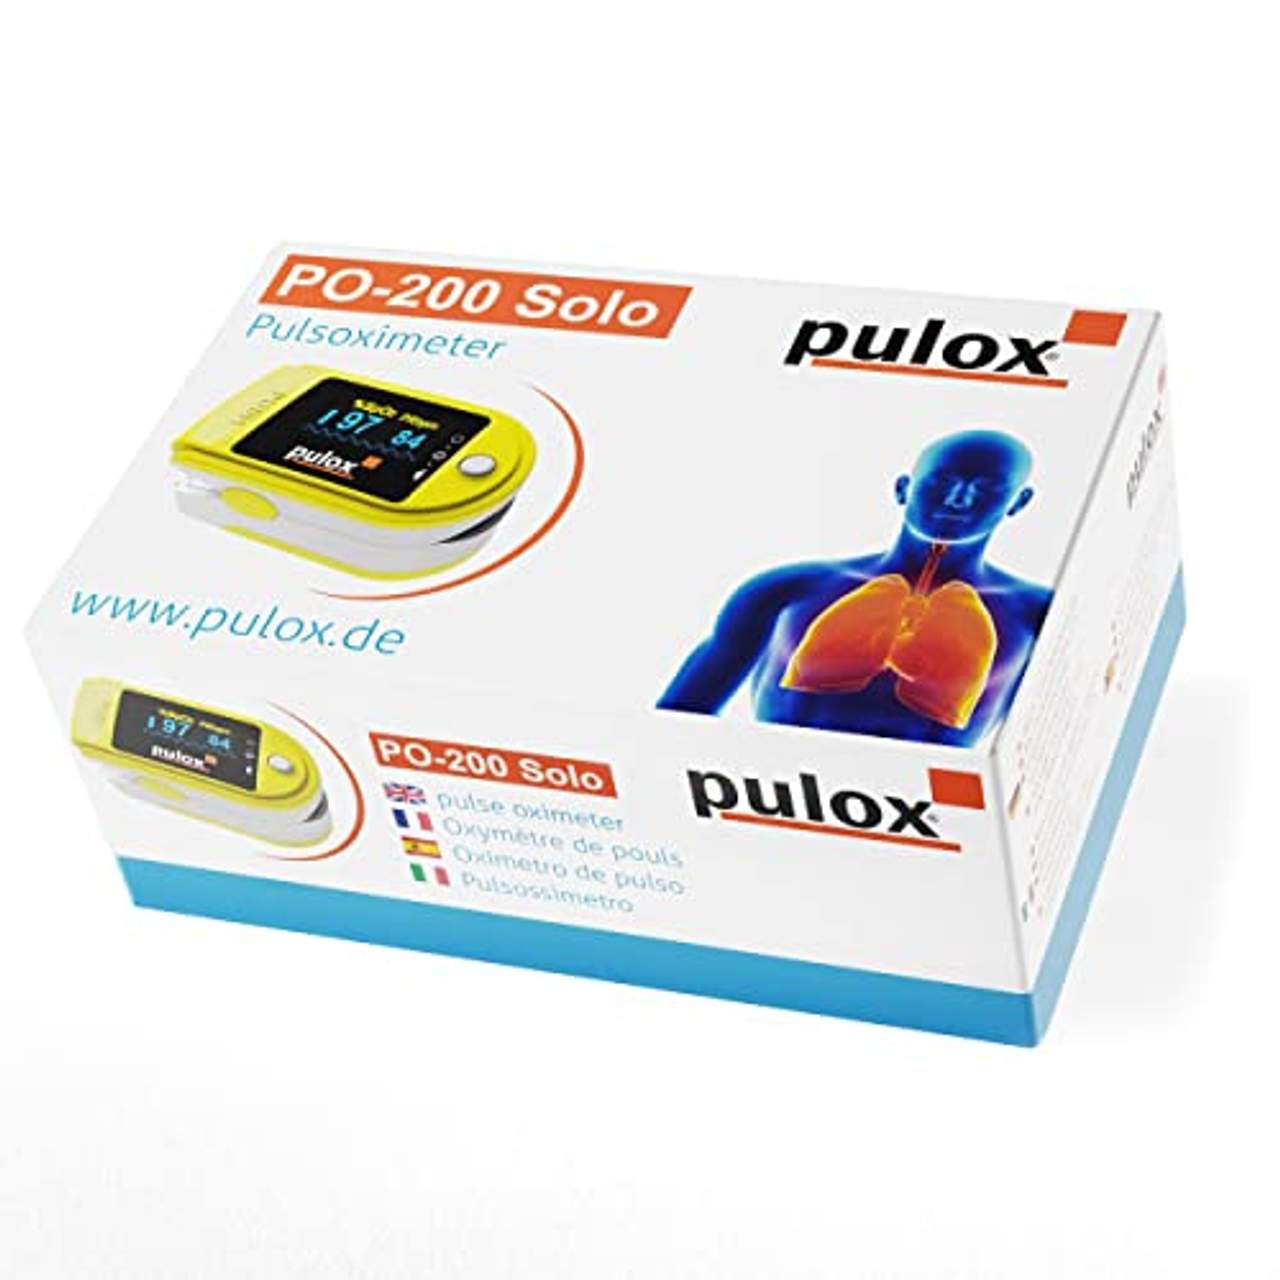 Pulsoximeter Pulox PO-200 Solo Gelb